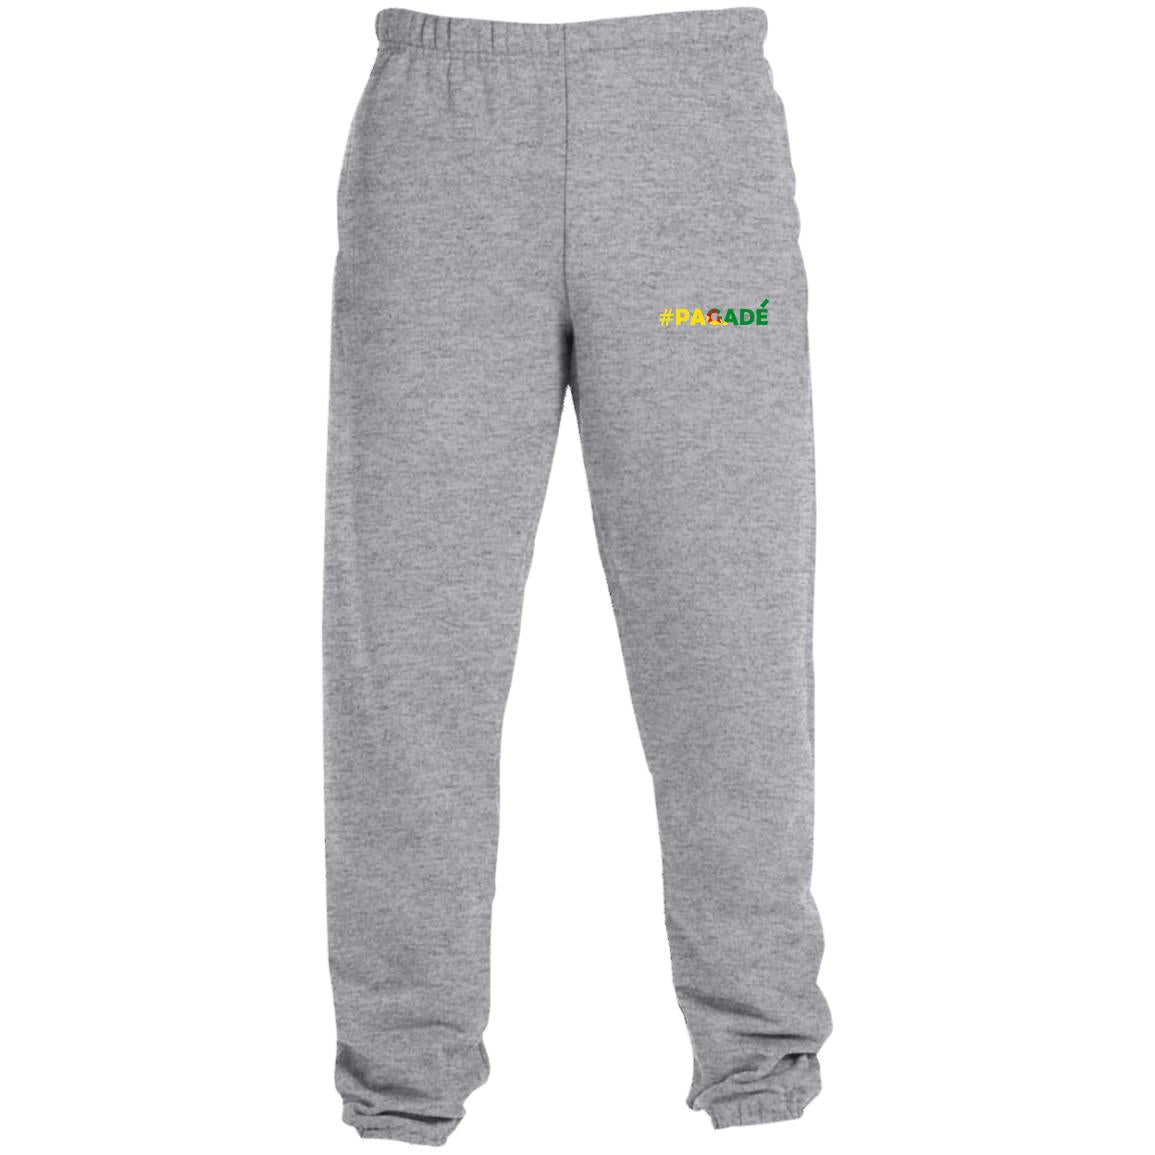 #PAGADE Sweatpants with Pockets